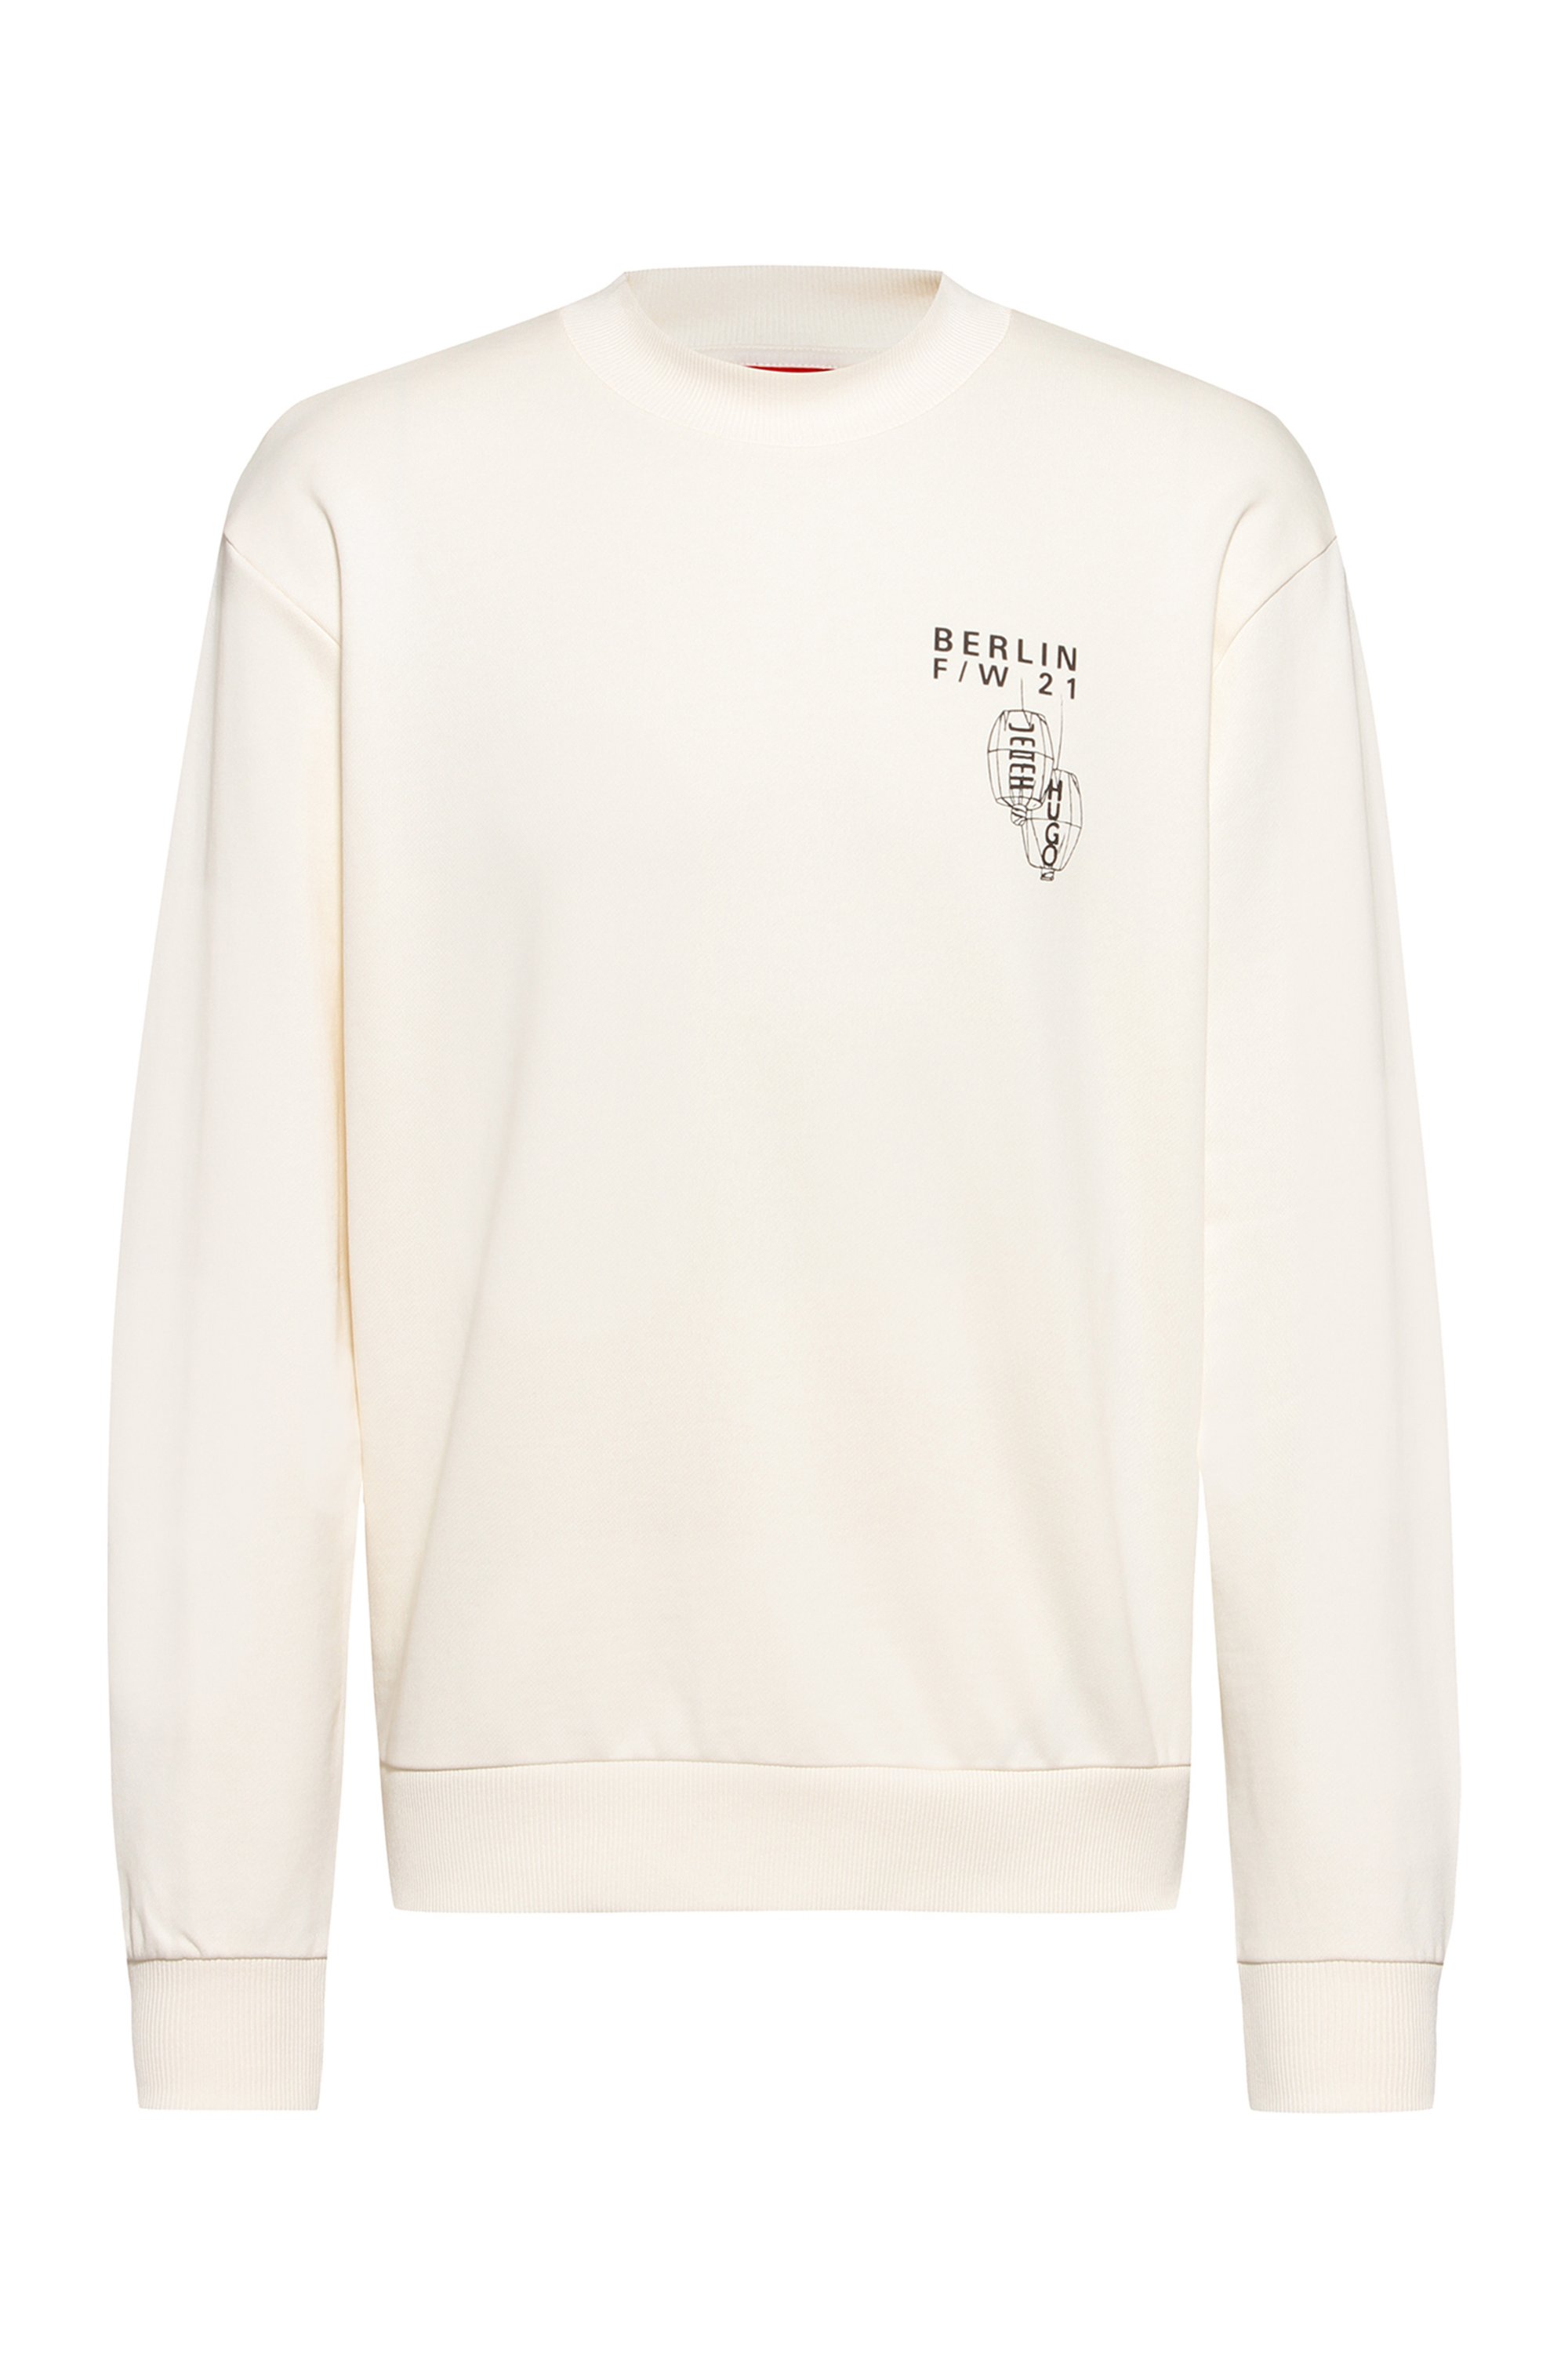 Limited-edition HUGO x Umami unisex sweatshirt in French terry cotton, White